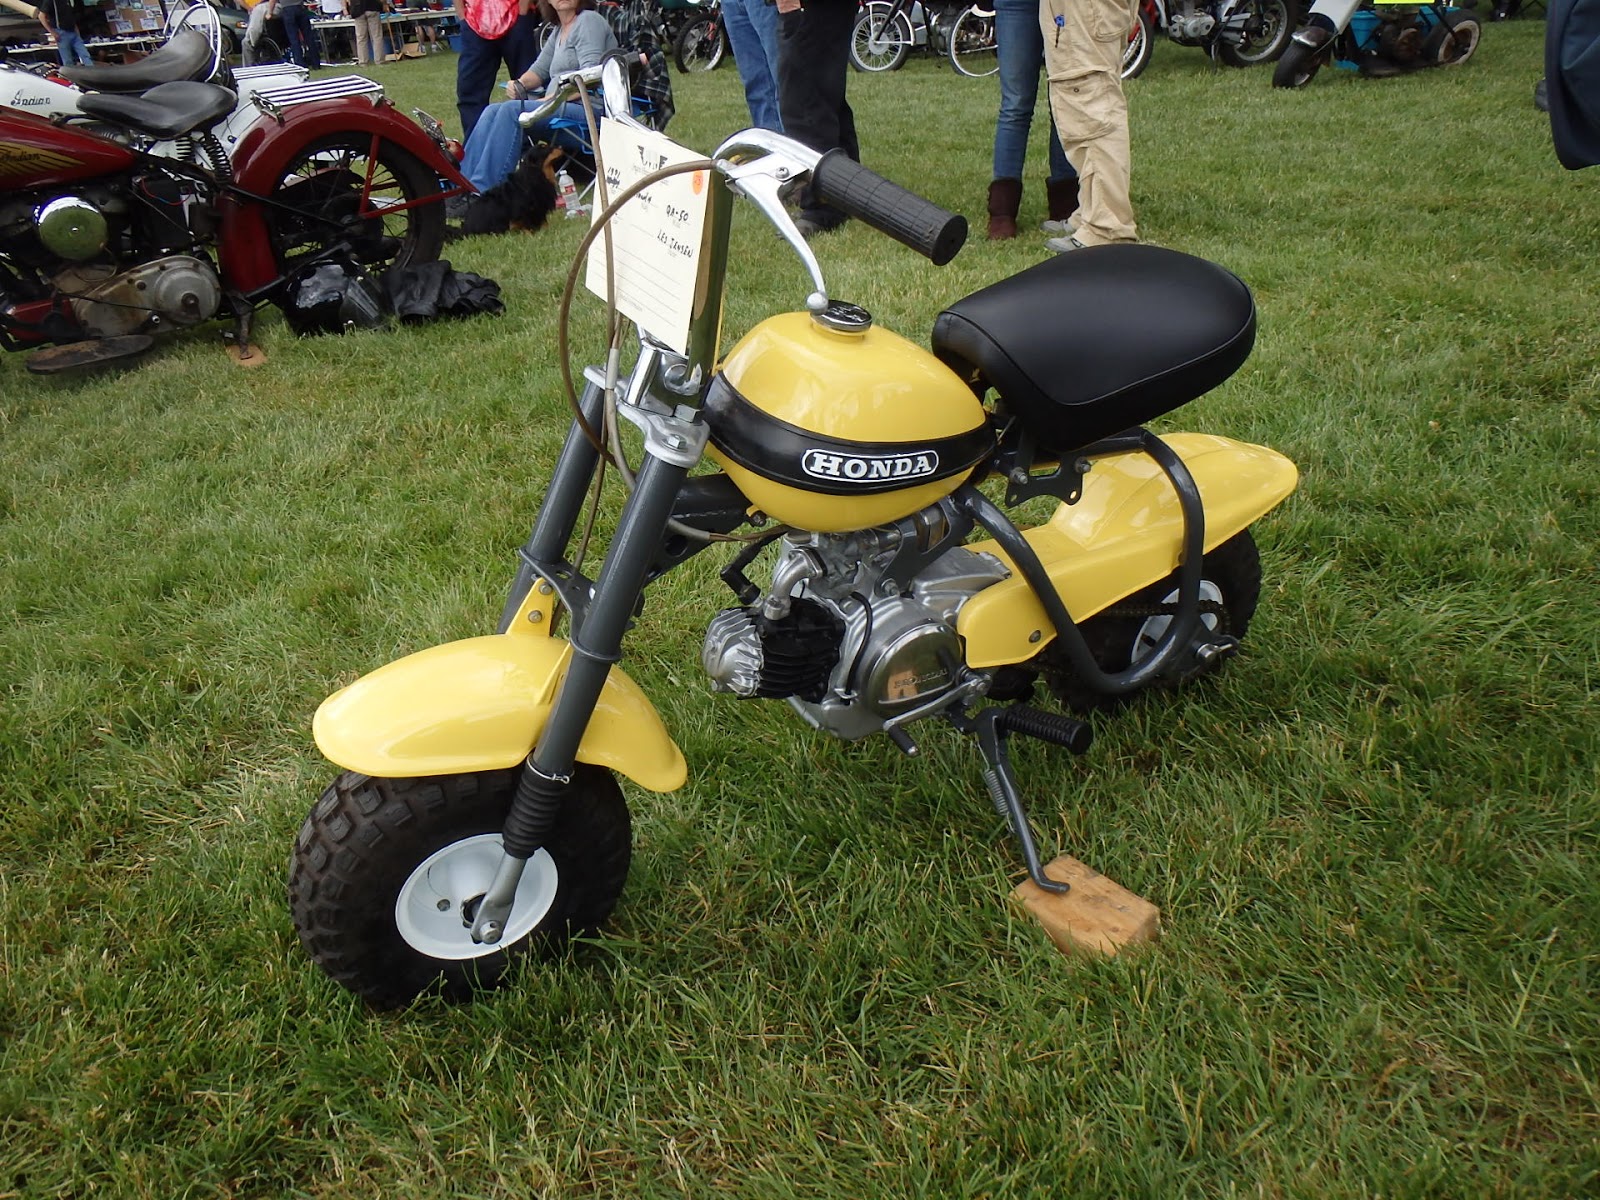 Honda qa50 motorcycle #4